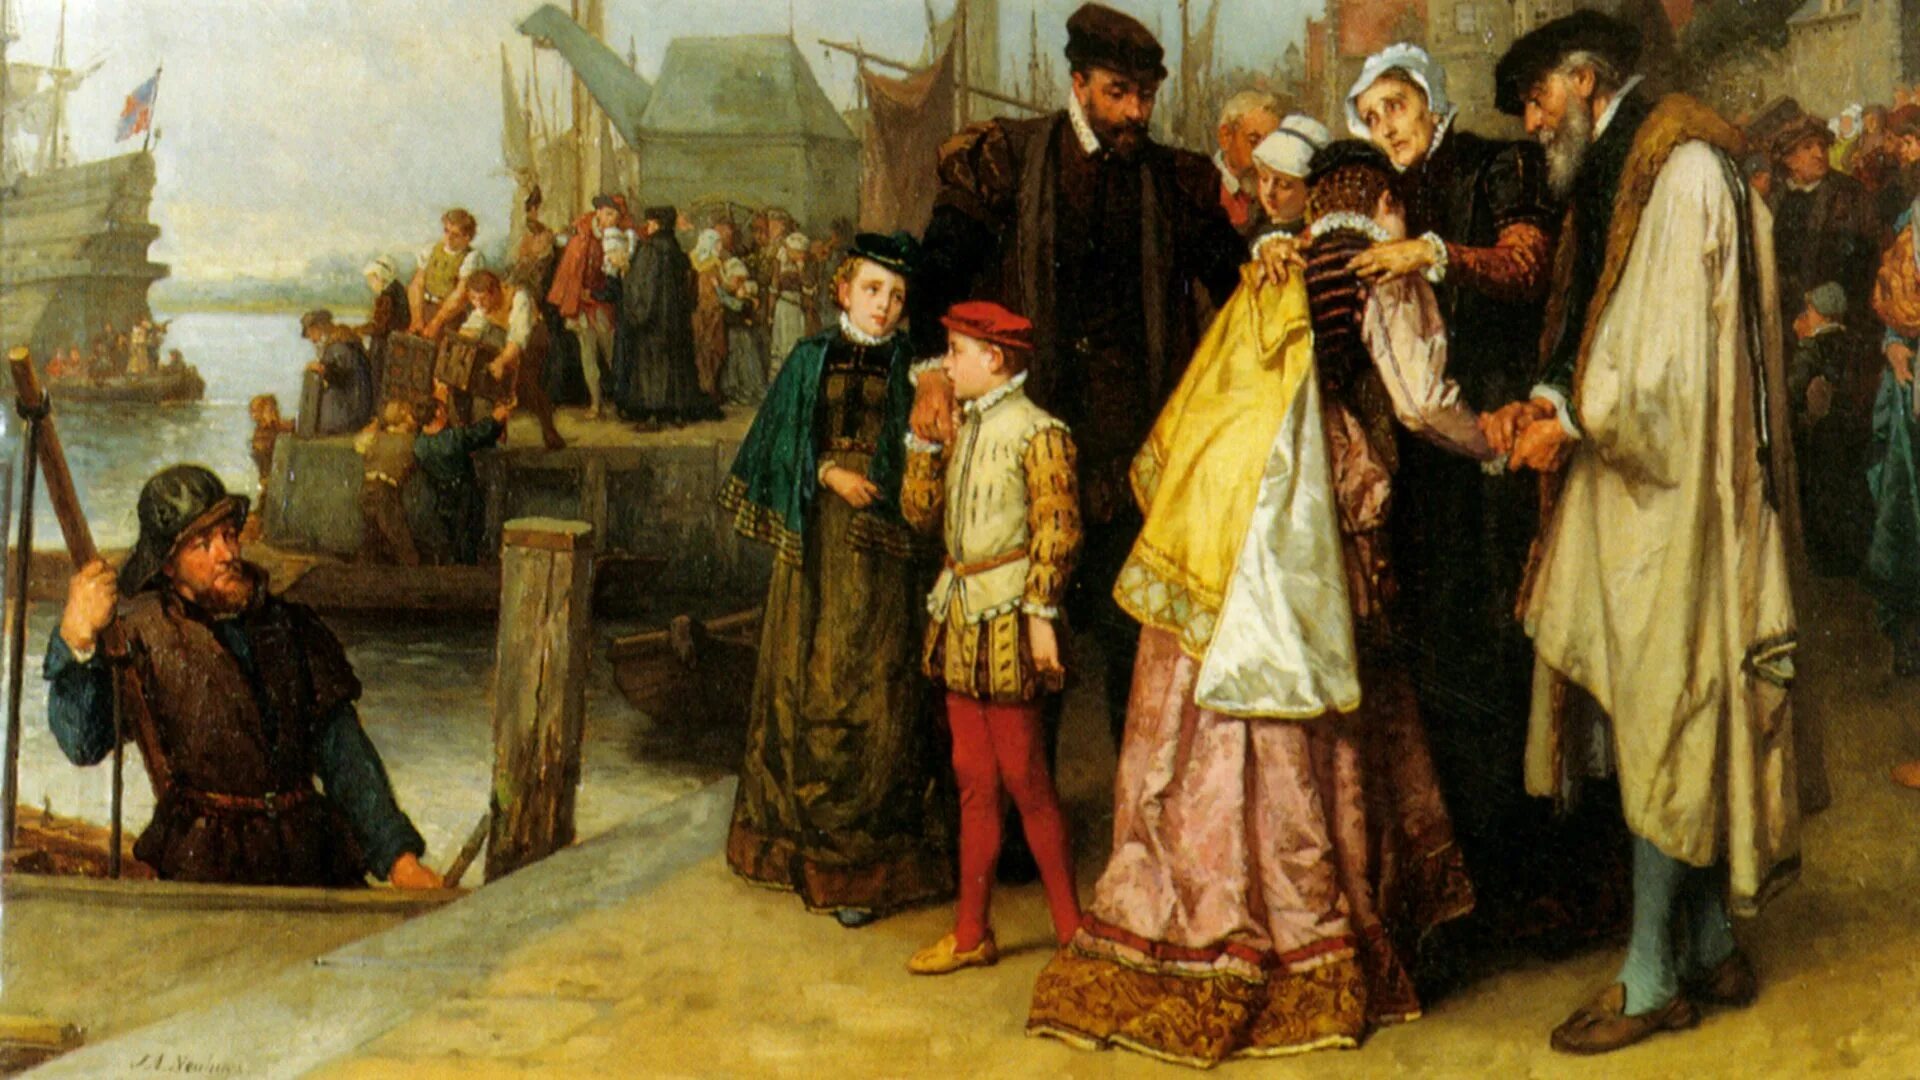 Право господина Поленов. Поленов право господина картина. "Право господина", 1874.